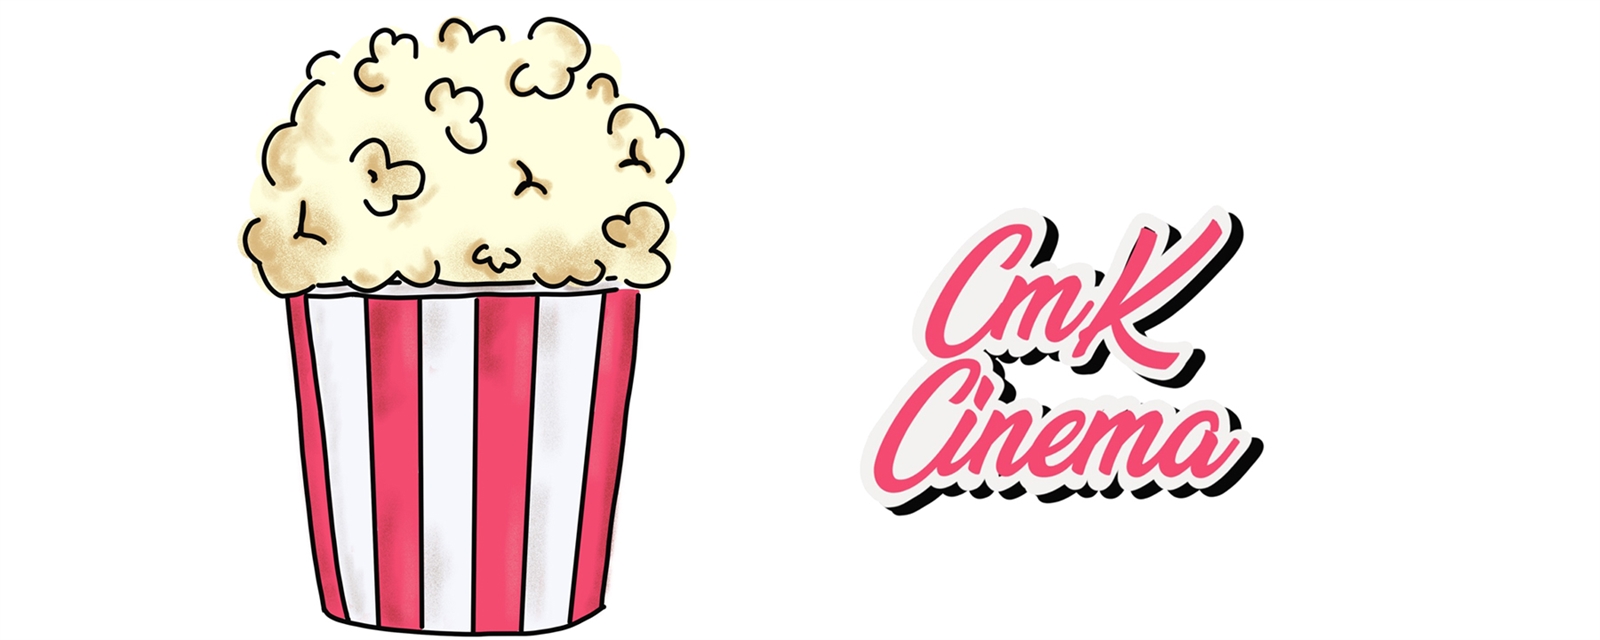 CmK Cinema